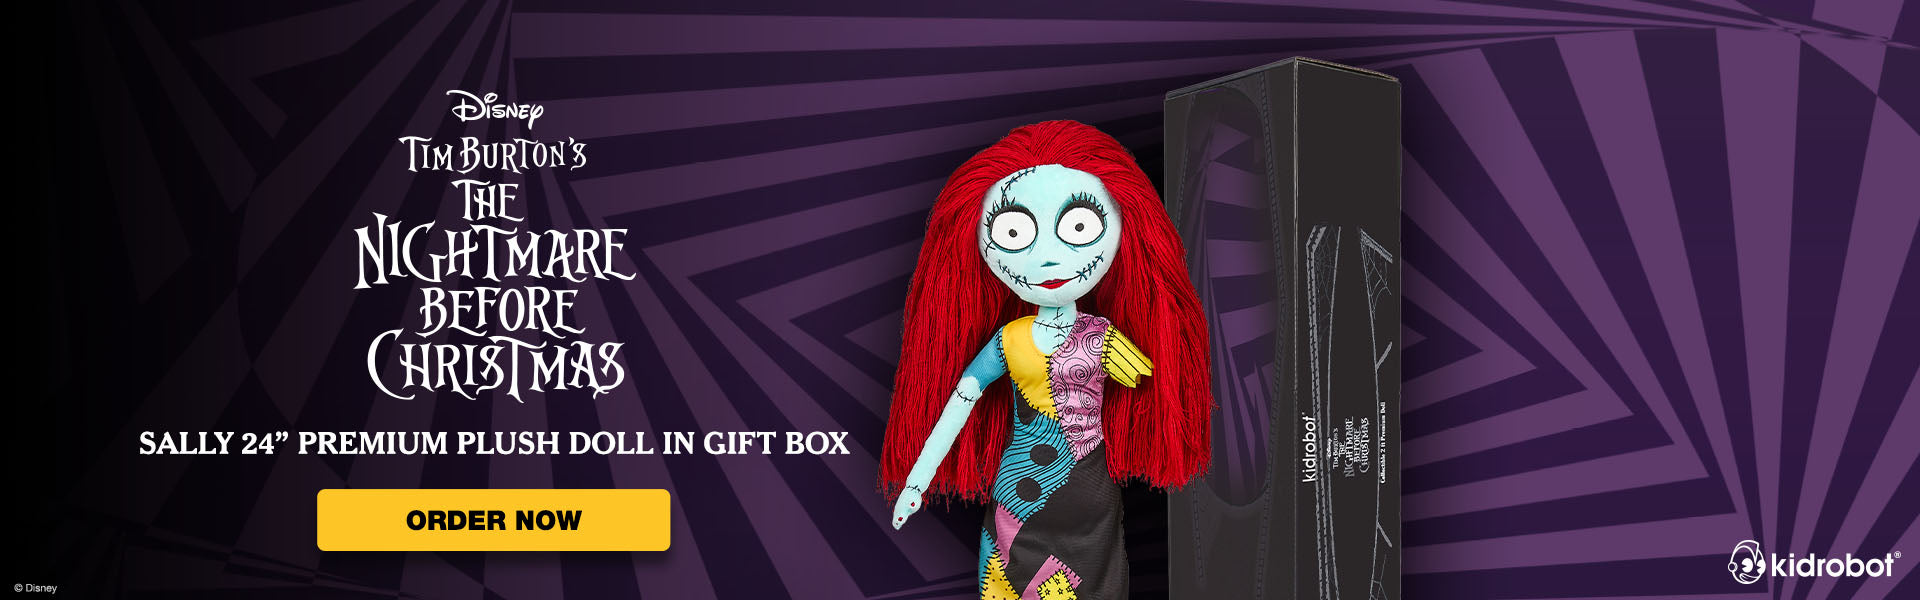 The Nightmare Before Christmas Sally 24" Premium Plush Doll in Gift Box